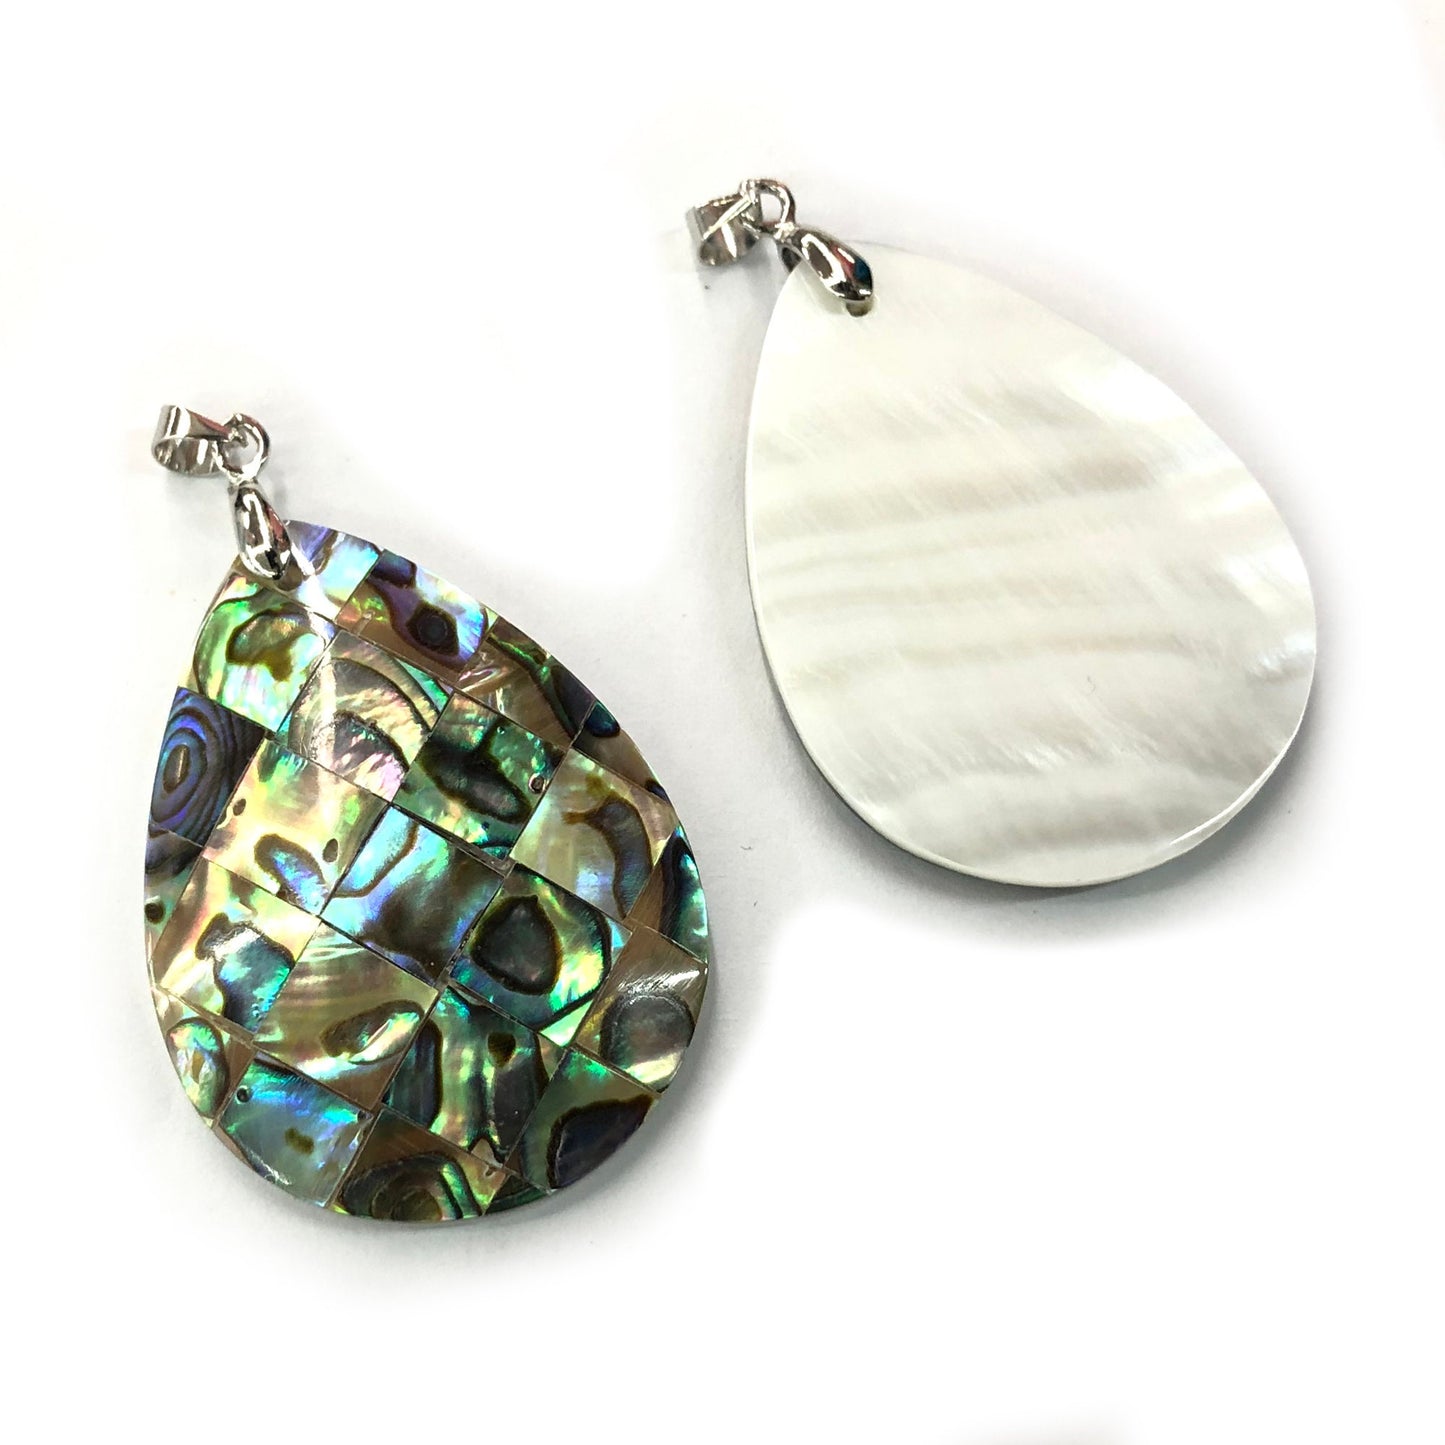 Abalone Shell Pendant Necklace Teardrop Pendant Necklace 18''